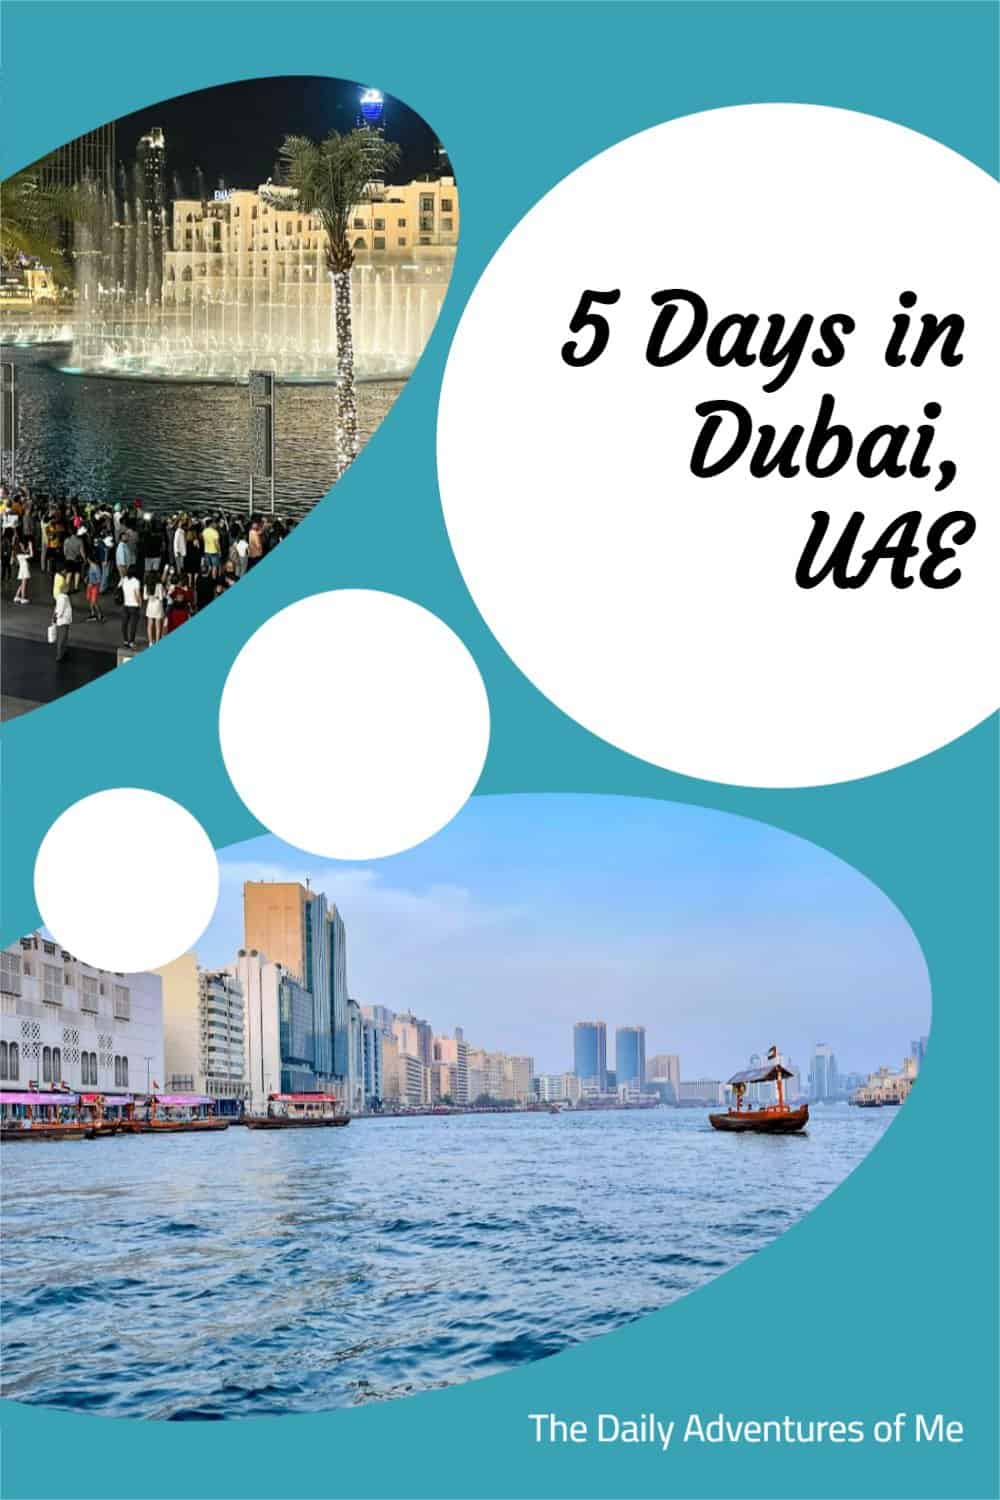 Read on to make your best 5-Day Dubai Itinerary. #UnitedArabEmirates